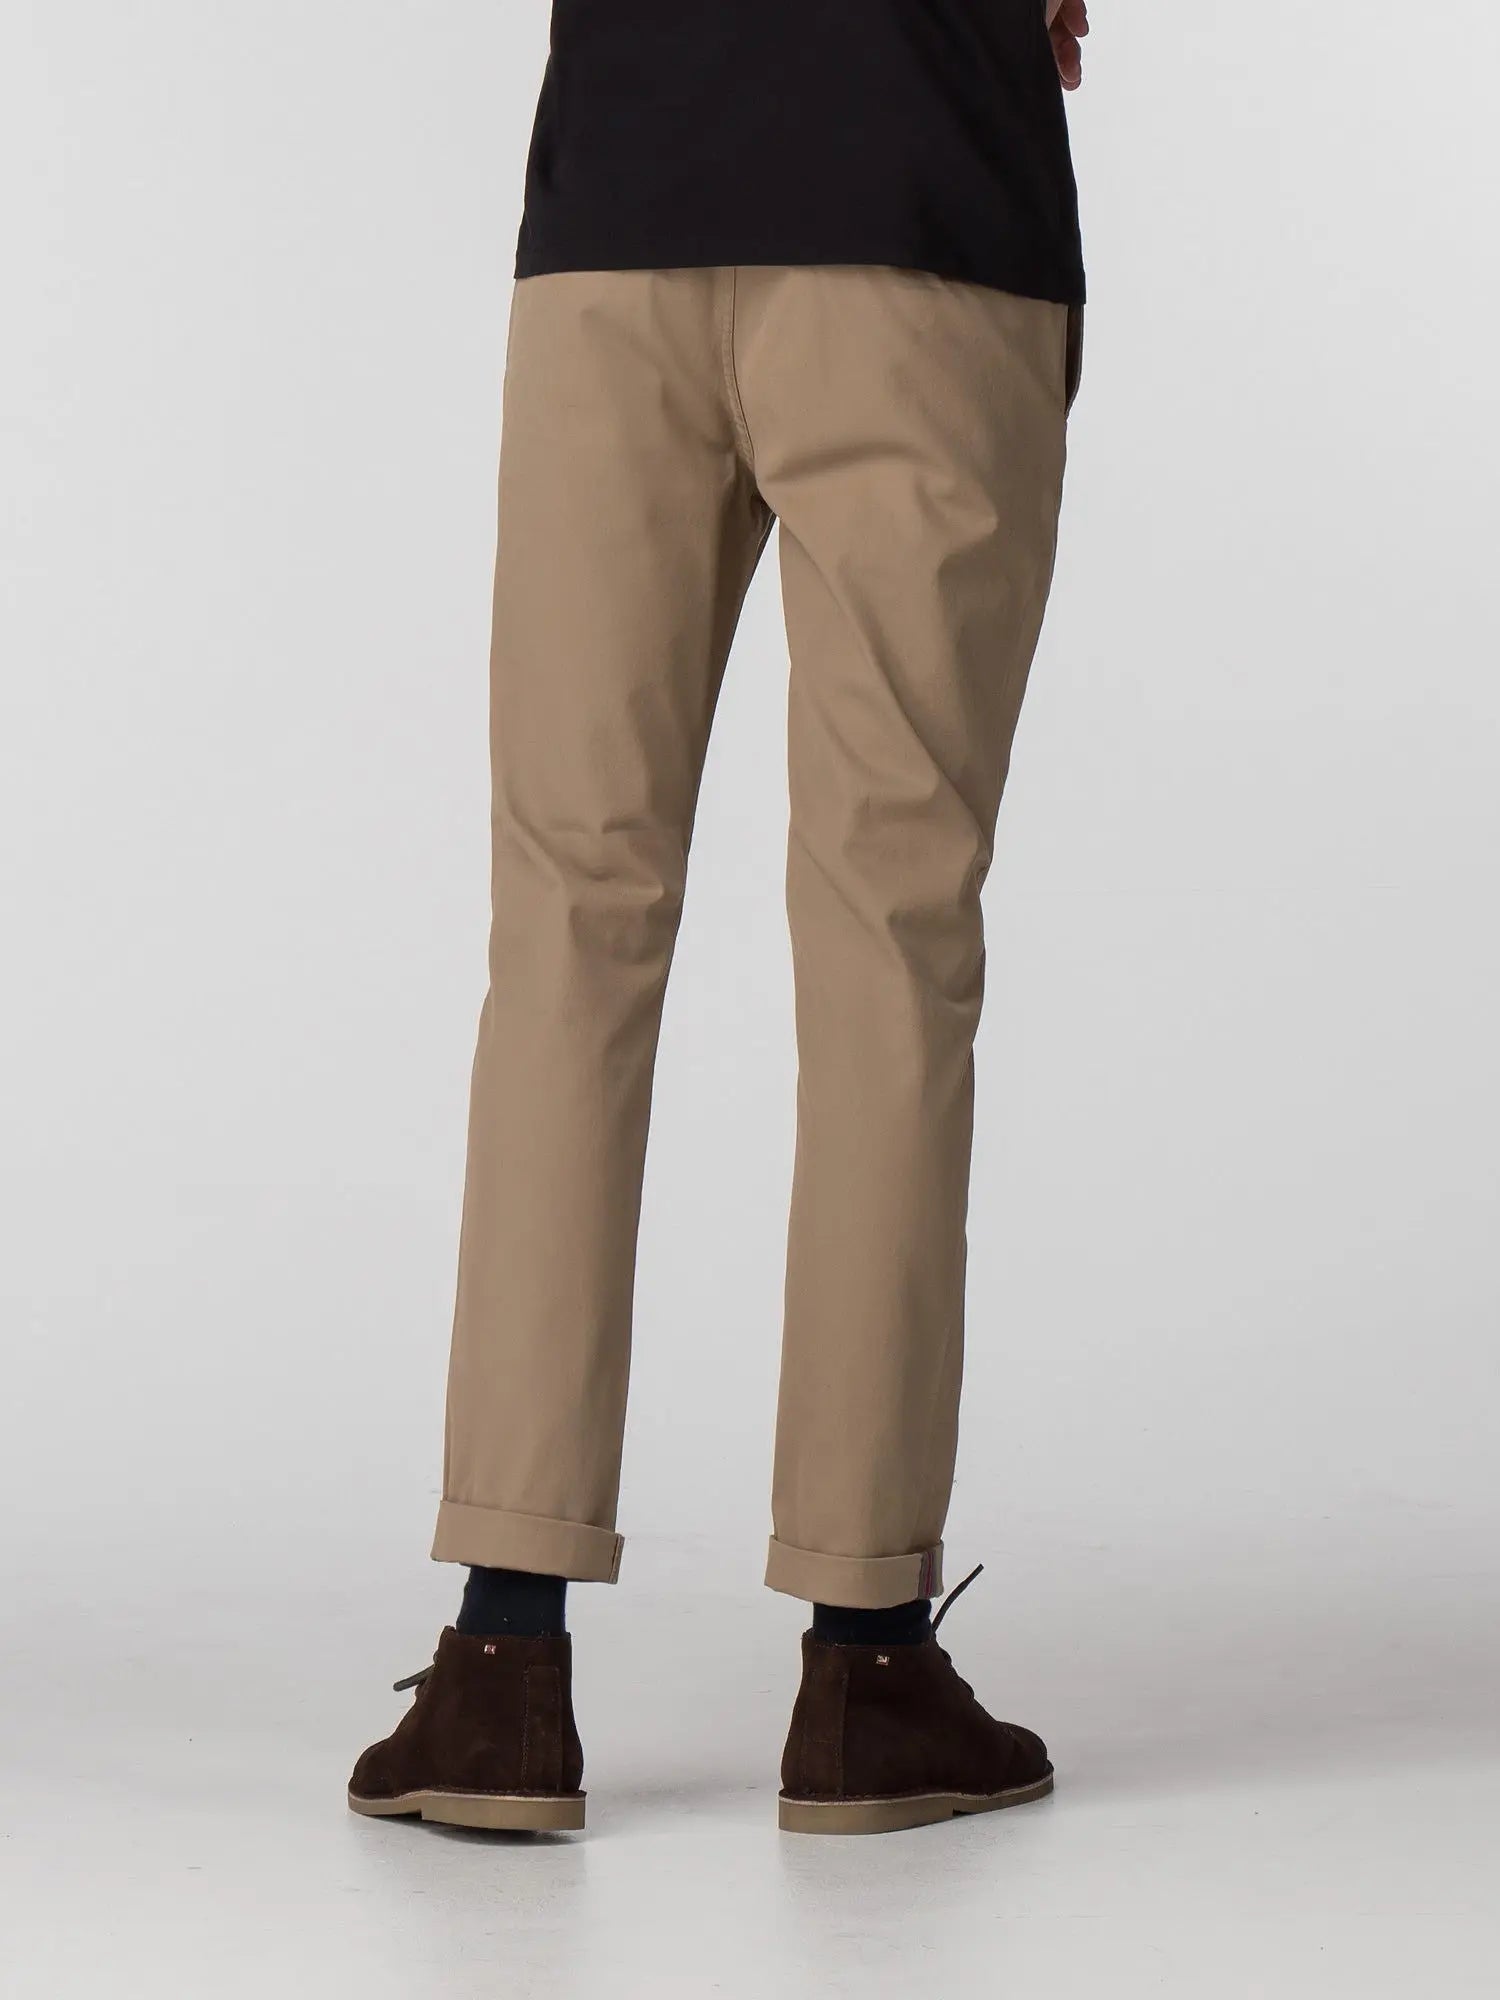 Ben Sherman Tonal Plaid Pant - Caramel - Size 34x30 in 2023 | Plaid pants,  Clothes design, Sherman